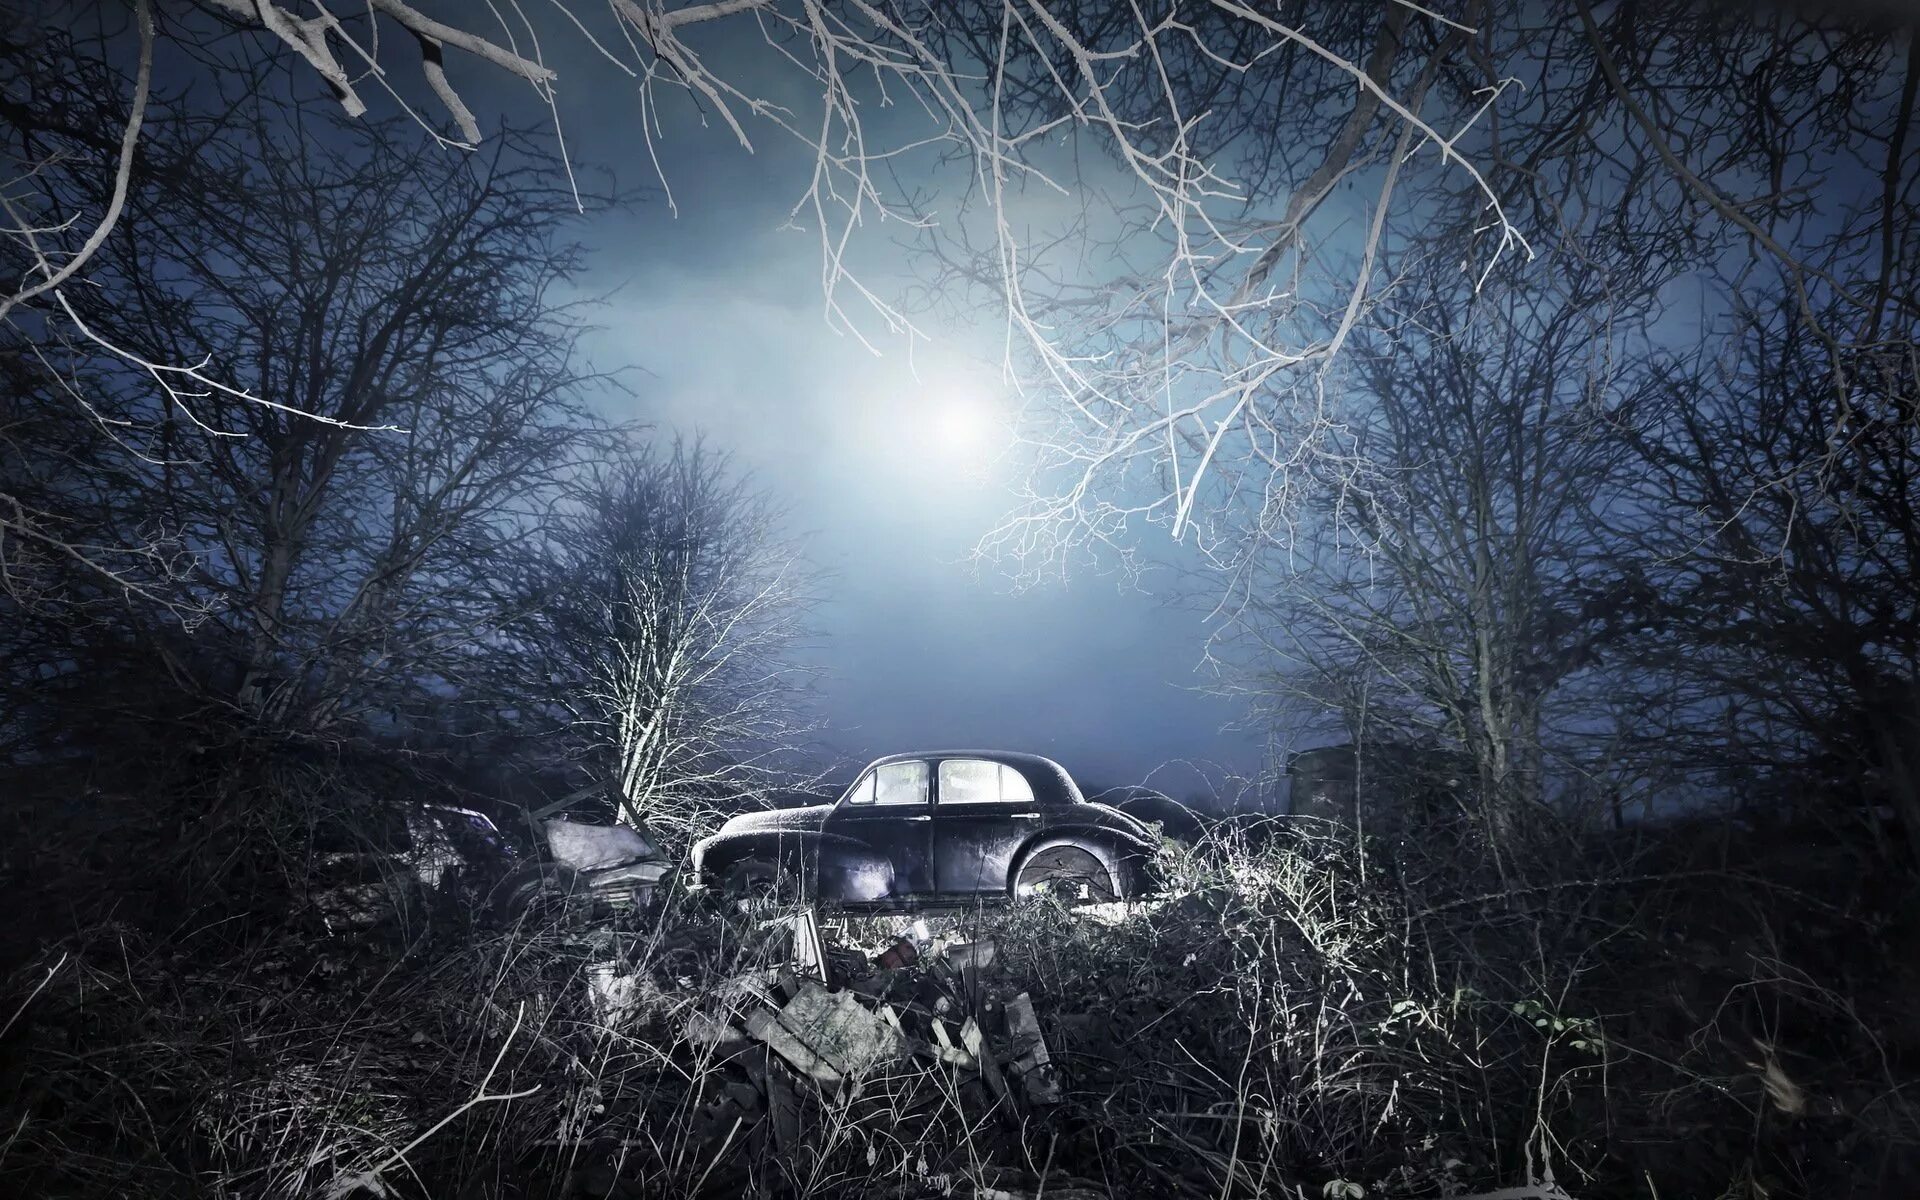 Хоррор на машине. Мрачная машина. Машина в ночном лесу. Машина в лесу в тумане. Машина в туманном лесу.